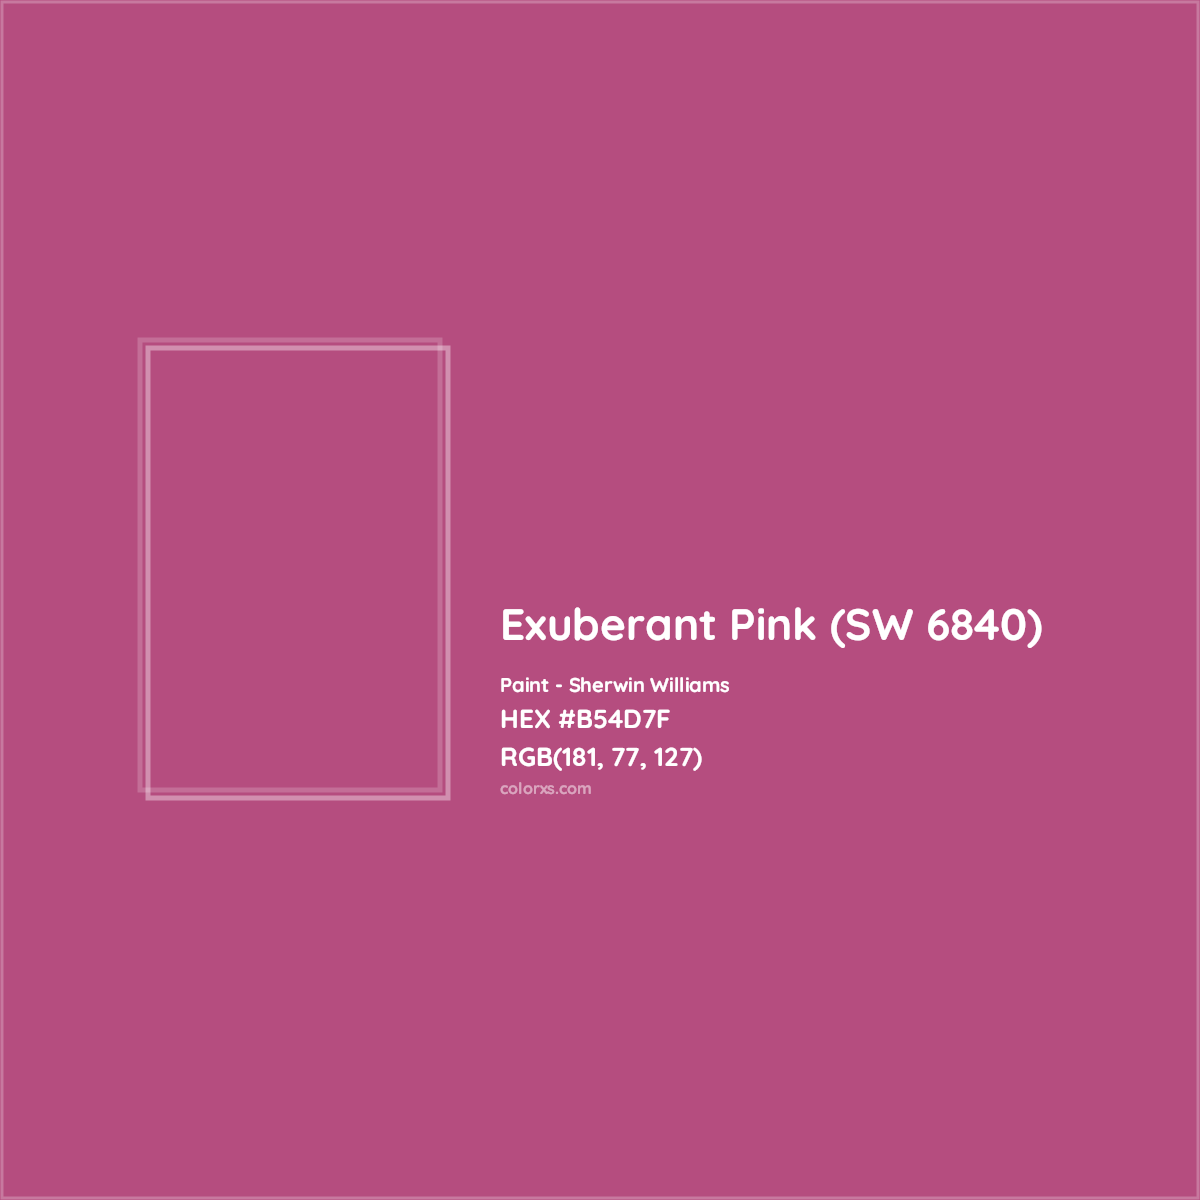 HEX #B54D7F Exuberant Pink (SW 6840) Paint Sherwin Williams - Color Code